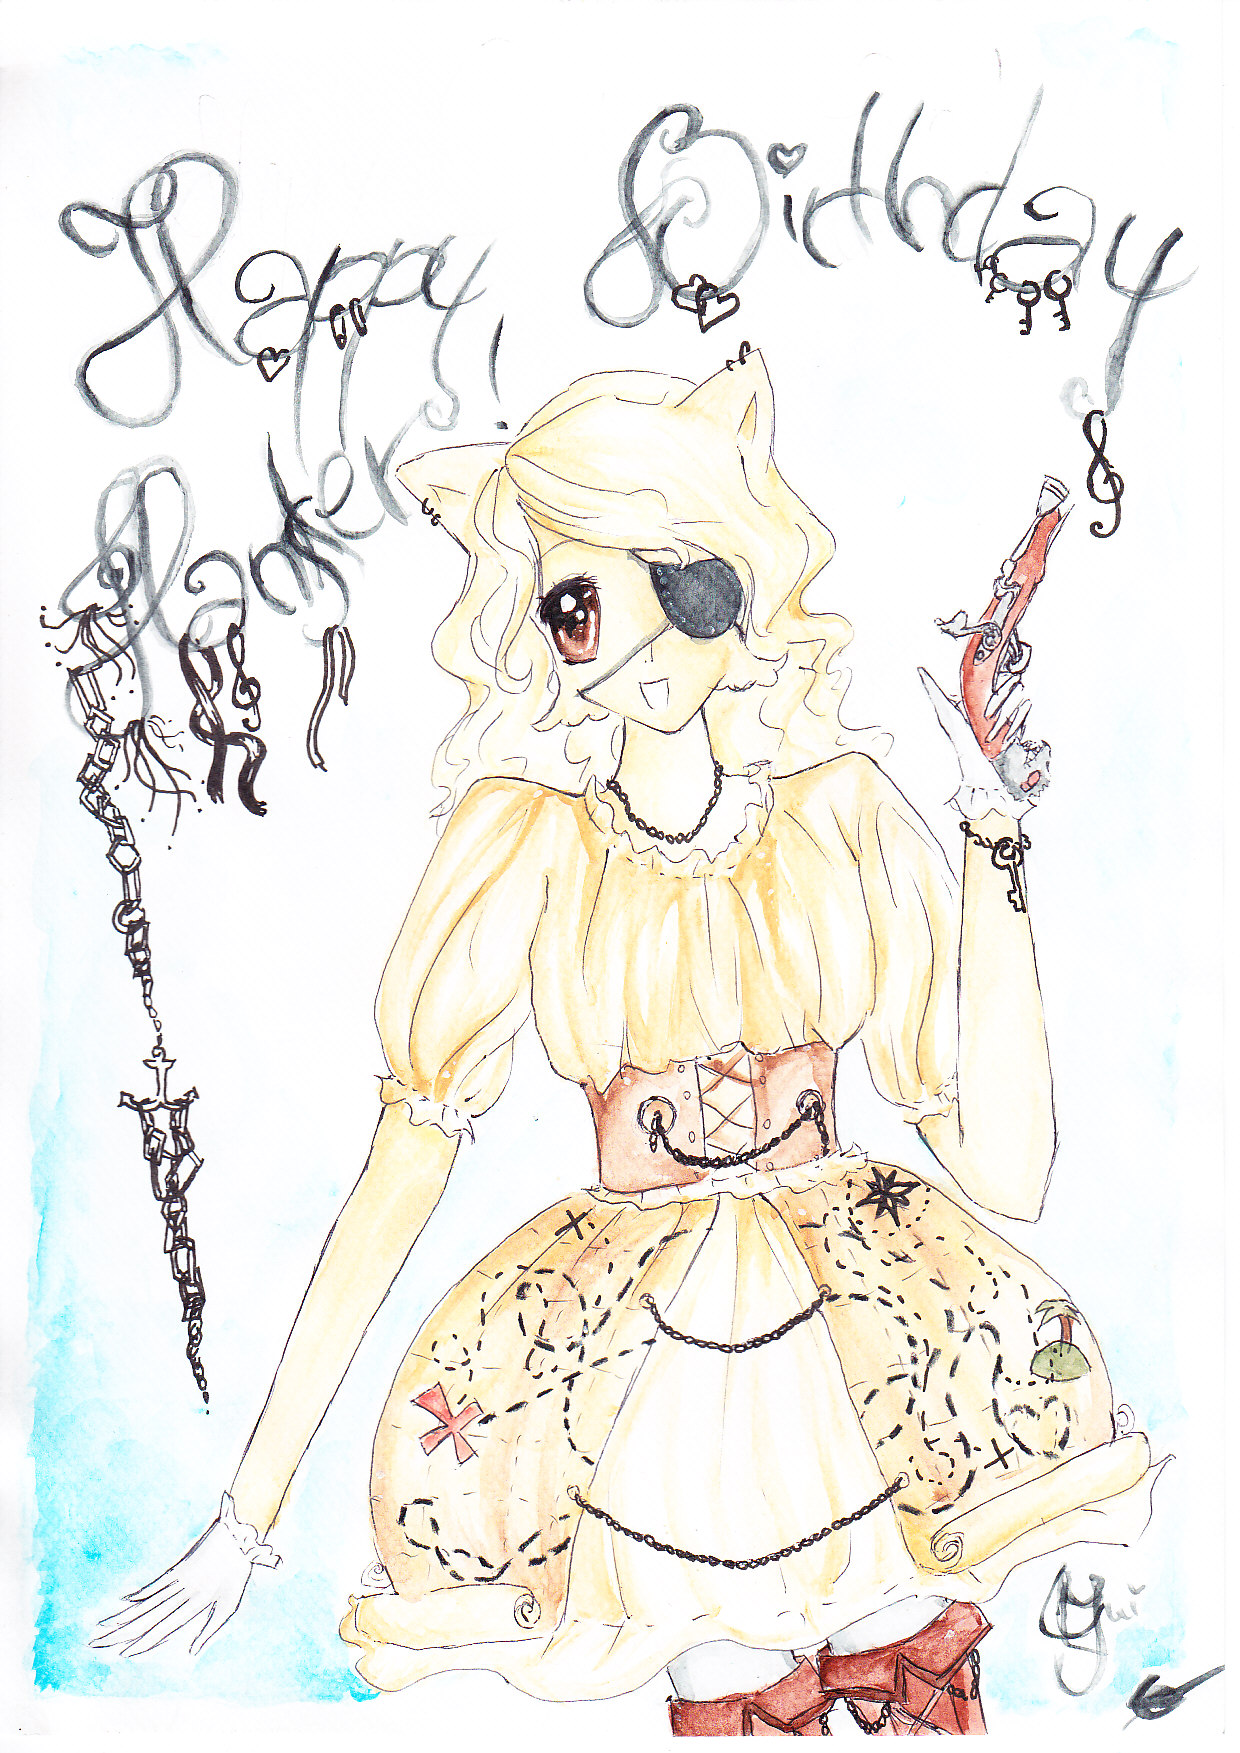 Candybooru image #5617, tagged with Daisy Meriancel_(Artist) costume